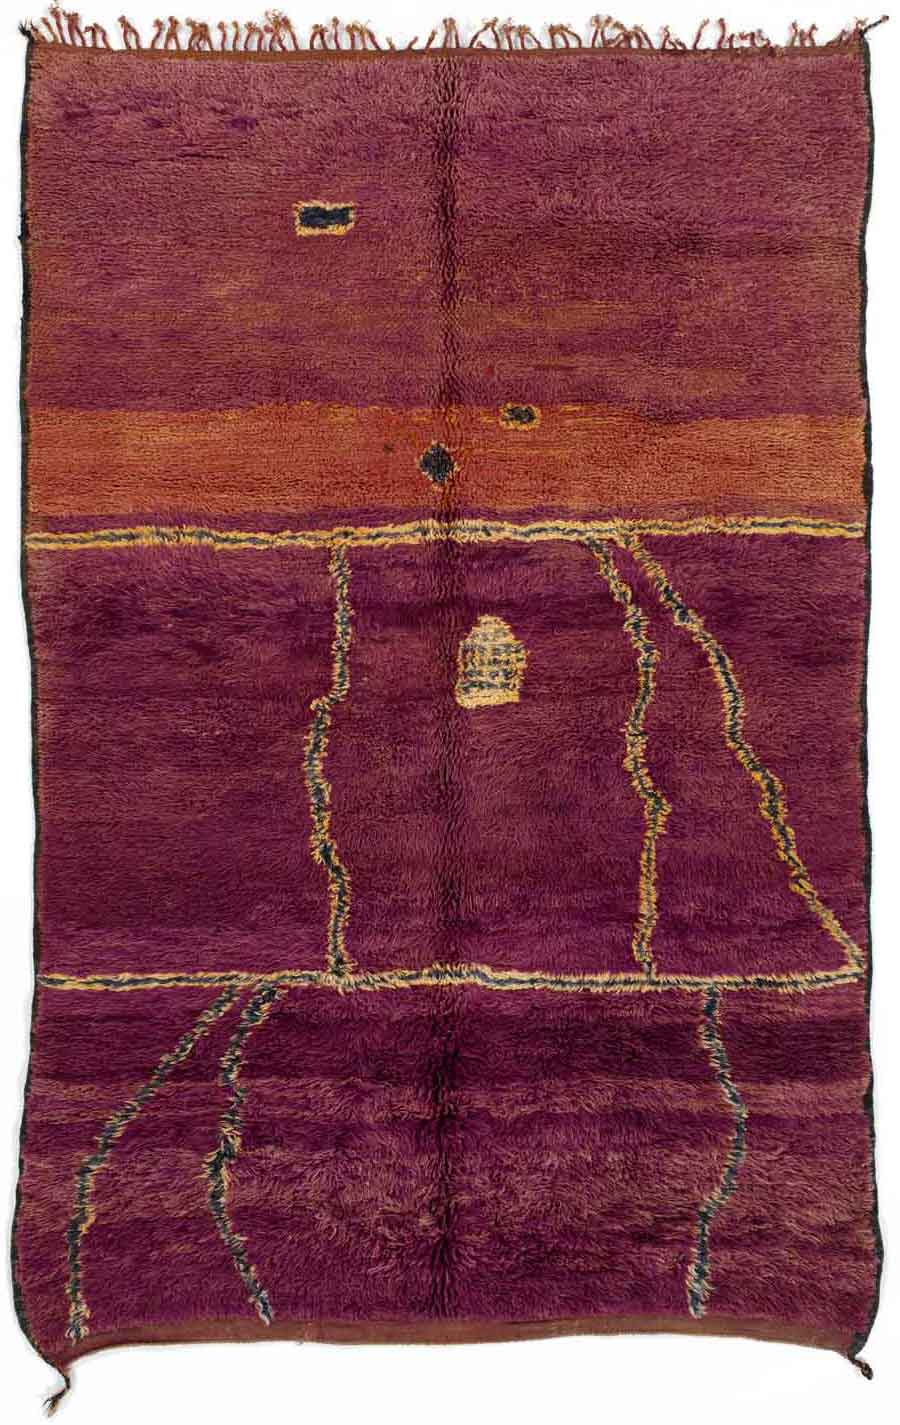 Beni Mguild pile rug, central Middle Atlas, Morocco, 1960. Jürgen Adam Collection at The International Design Museum, Munich 